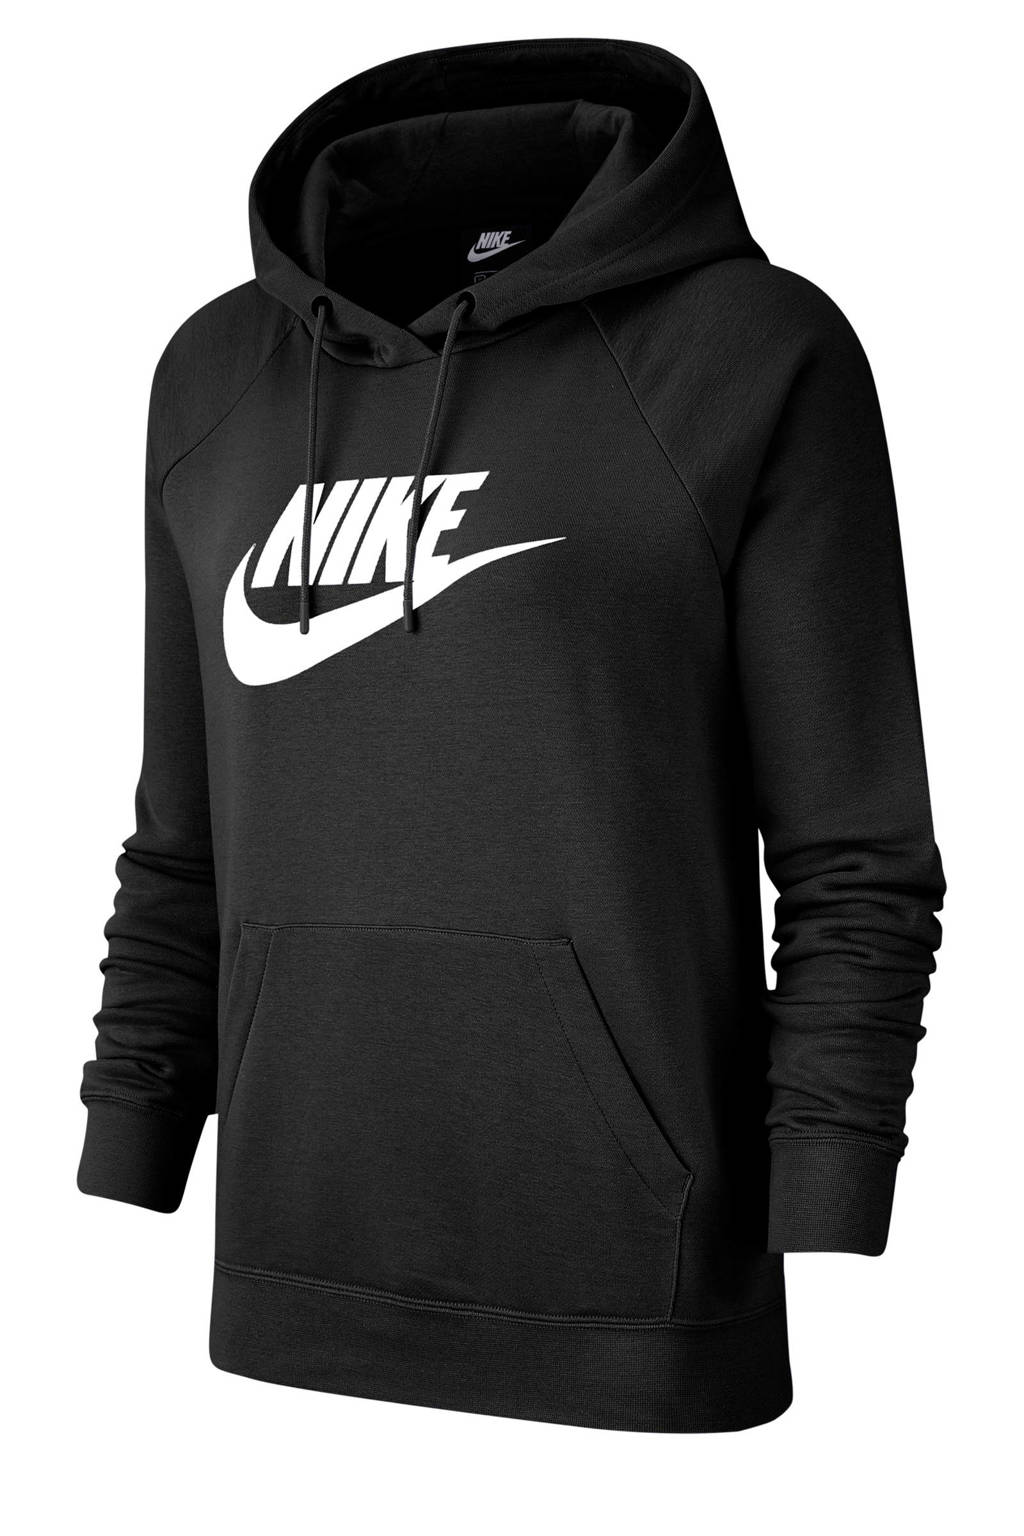 Nike hoodie zwart, Zwart/wit